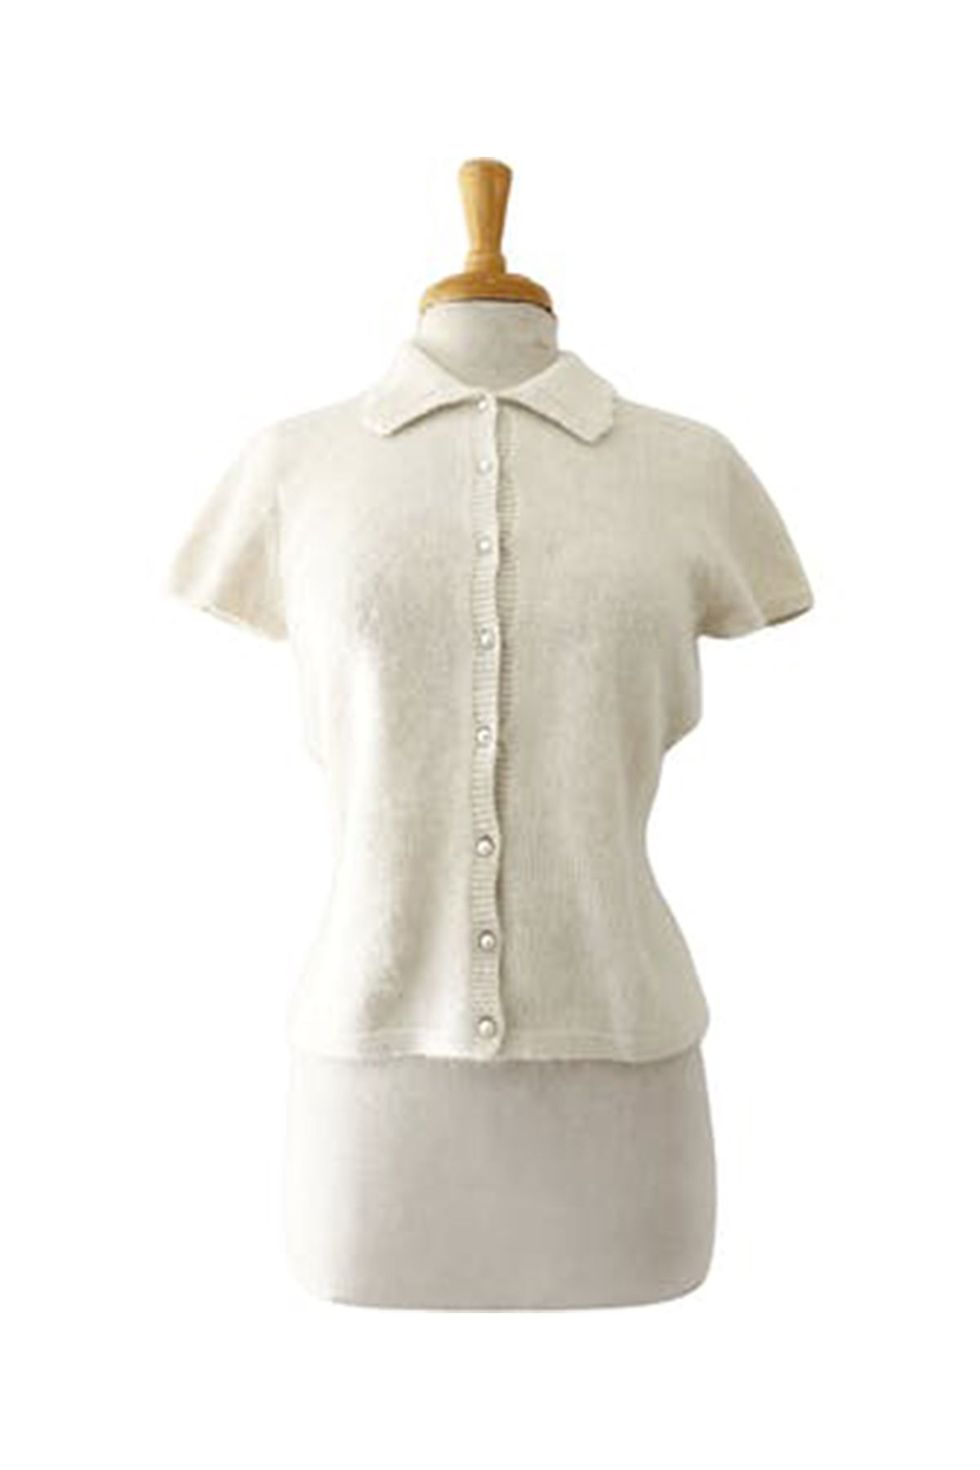 90’s Ivory Pearl Button Up Short Sleeve Sweater Top by Lauren Ralph Lauren